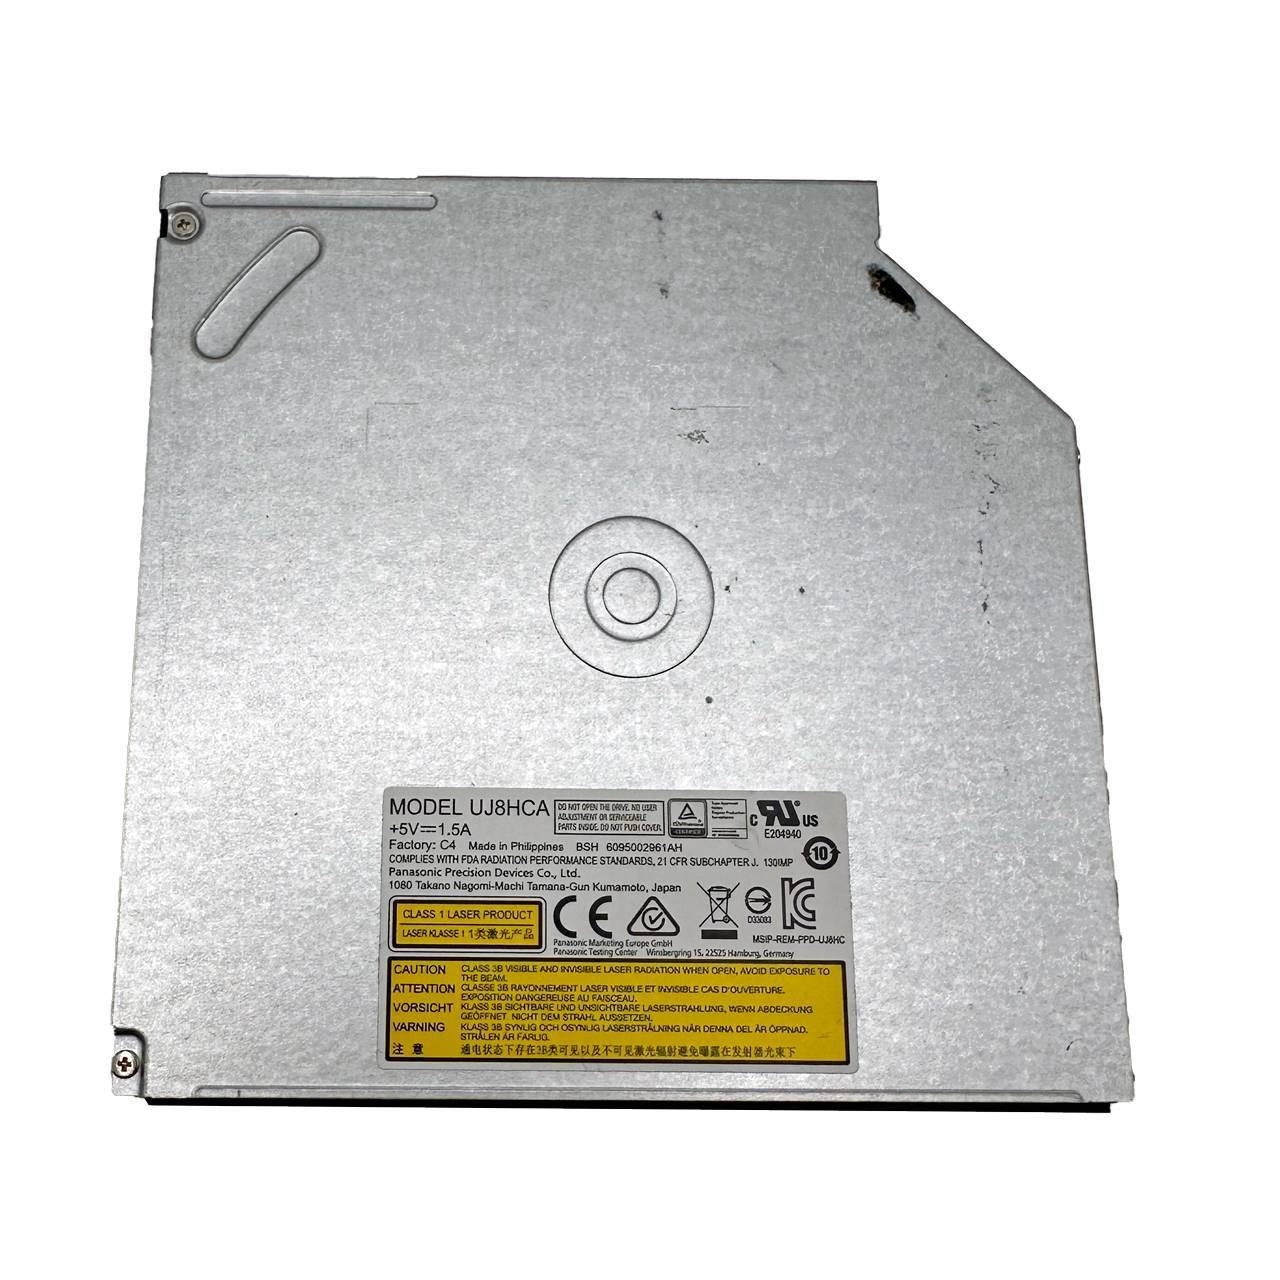 DVD-Brenner Panasonic UJ8HCA slim SATA 9mm gebraucht